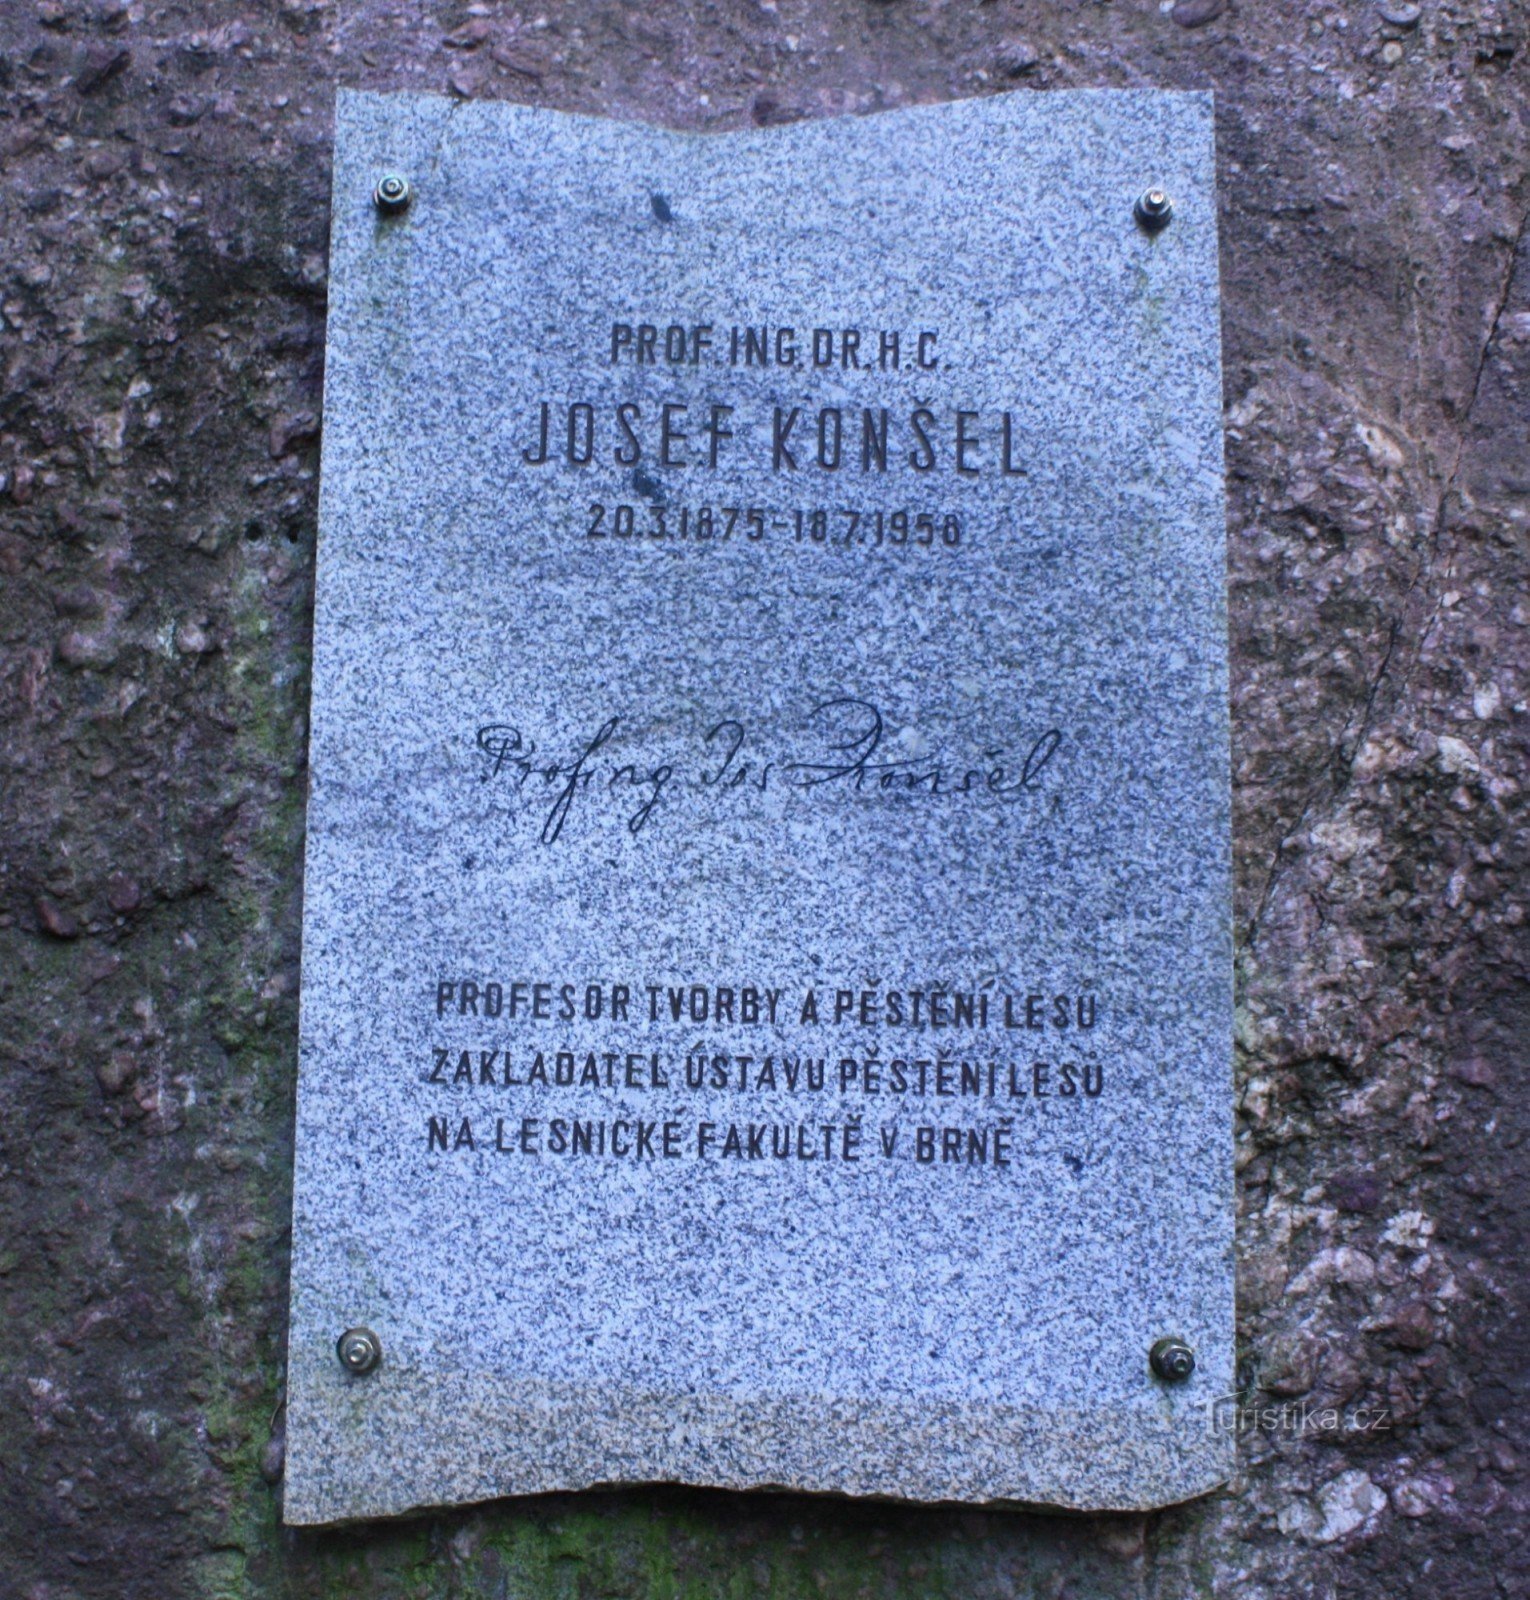 Monumento a Josef Konšel